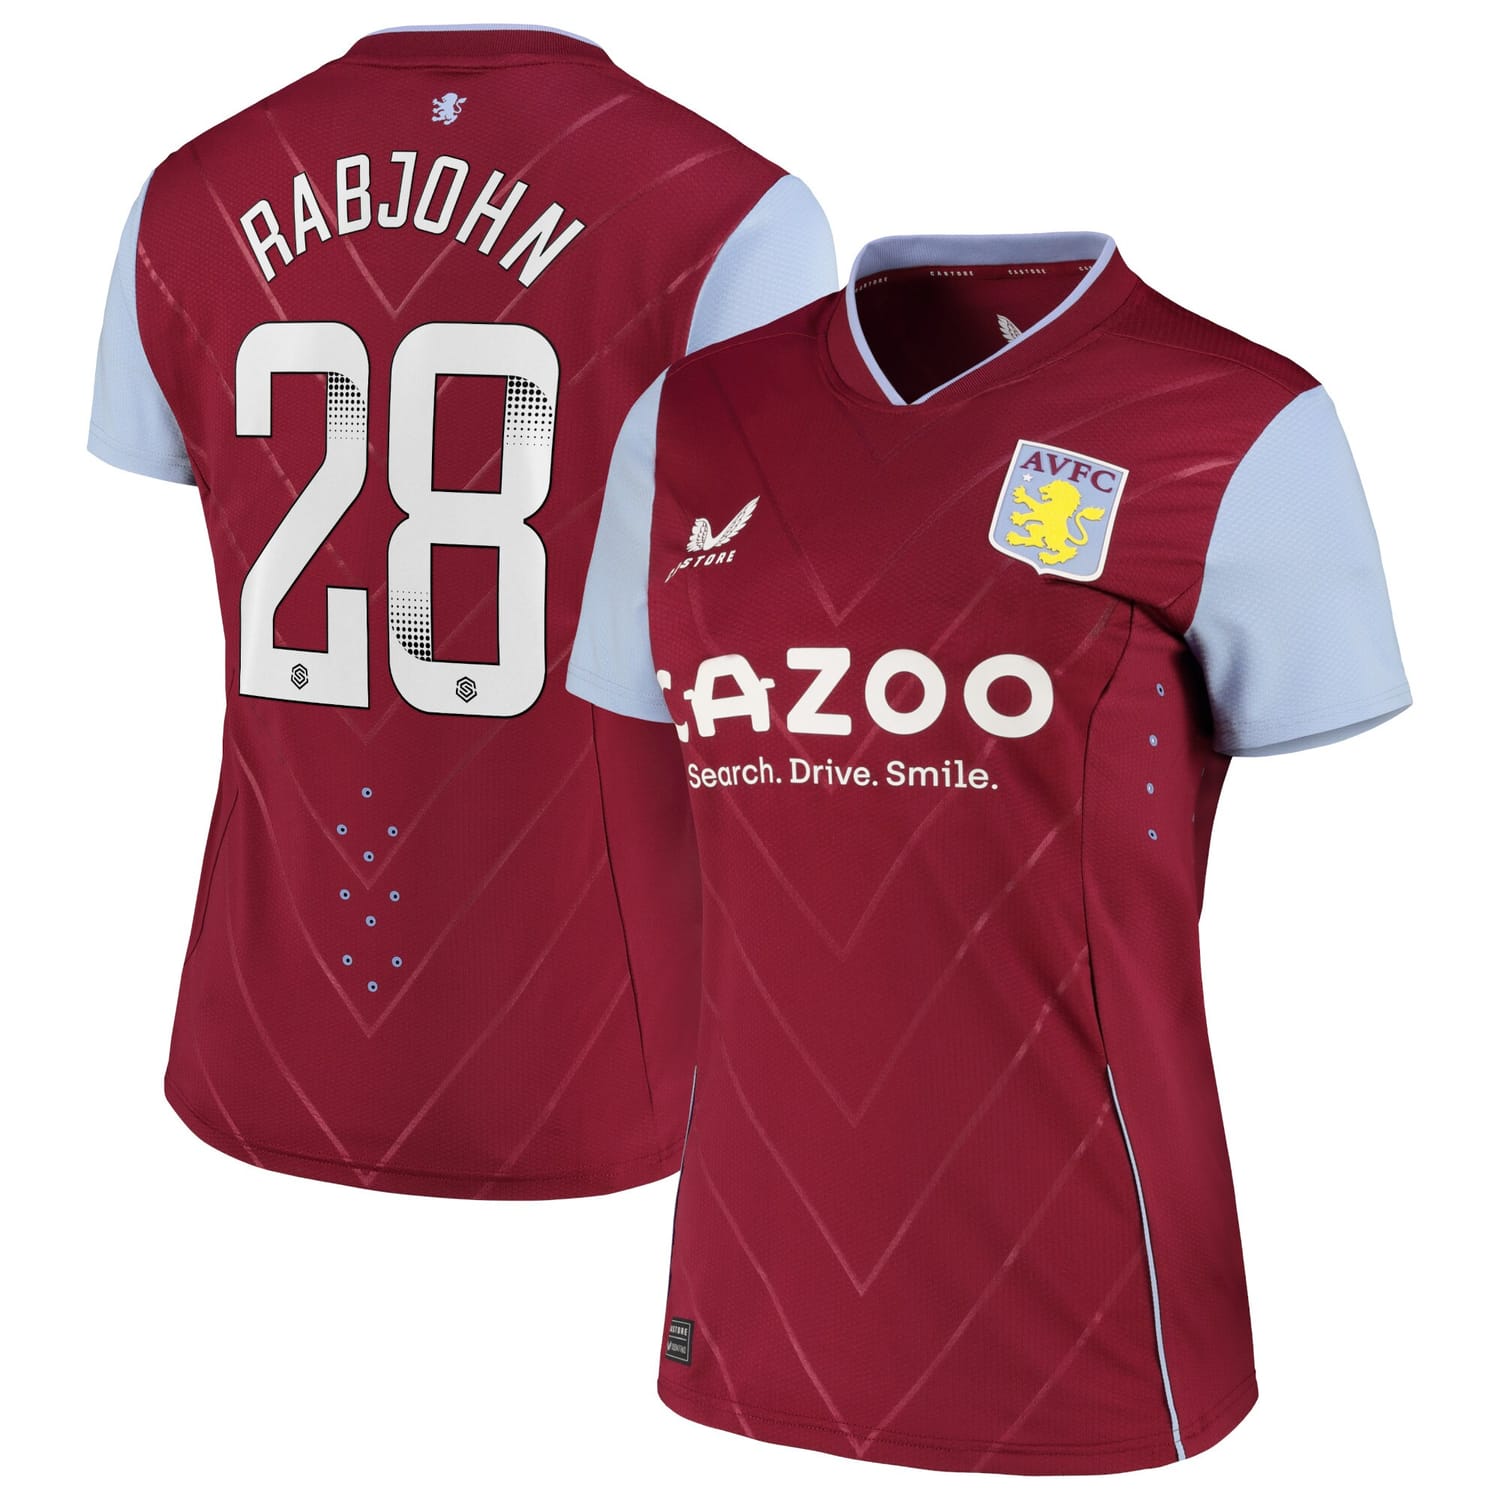 Premier League Aston Villa Home WSL Pro Jersey Shirt 2022-23 player Evie Rabjohn 28 printing for Women